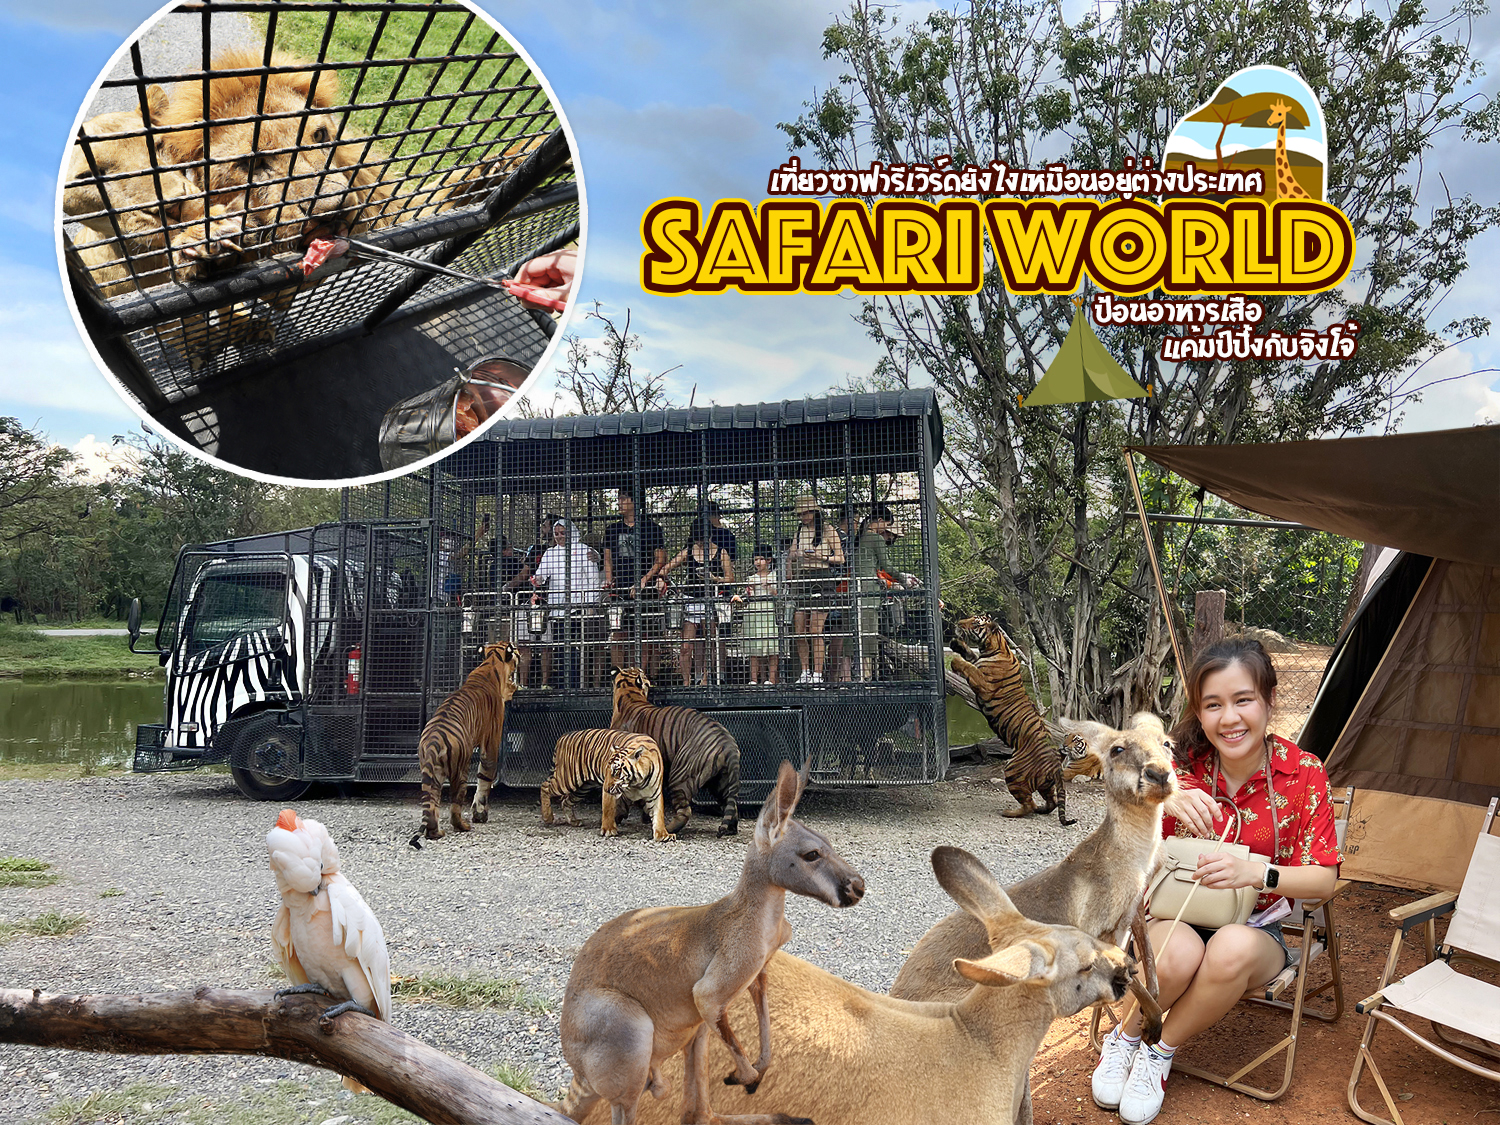 Safari World Bangkok Thailand Open Zoo and Show and Animal Studio 0